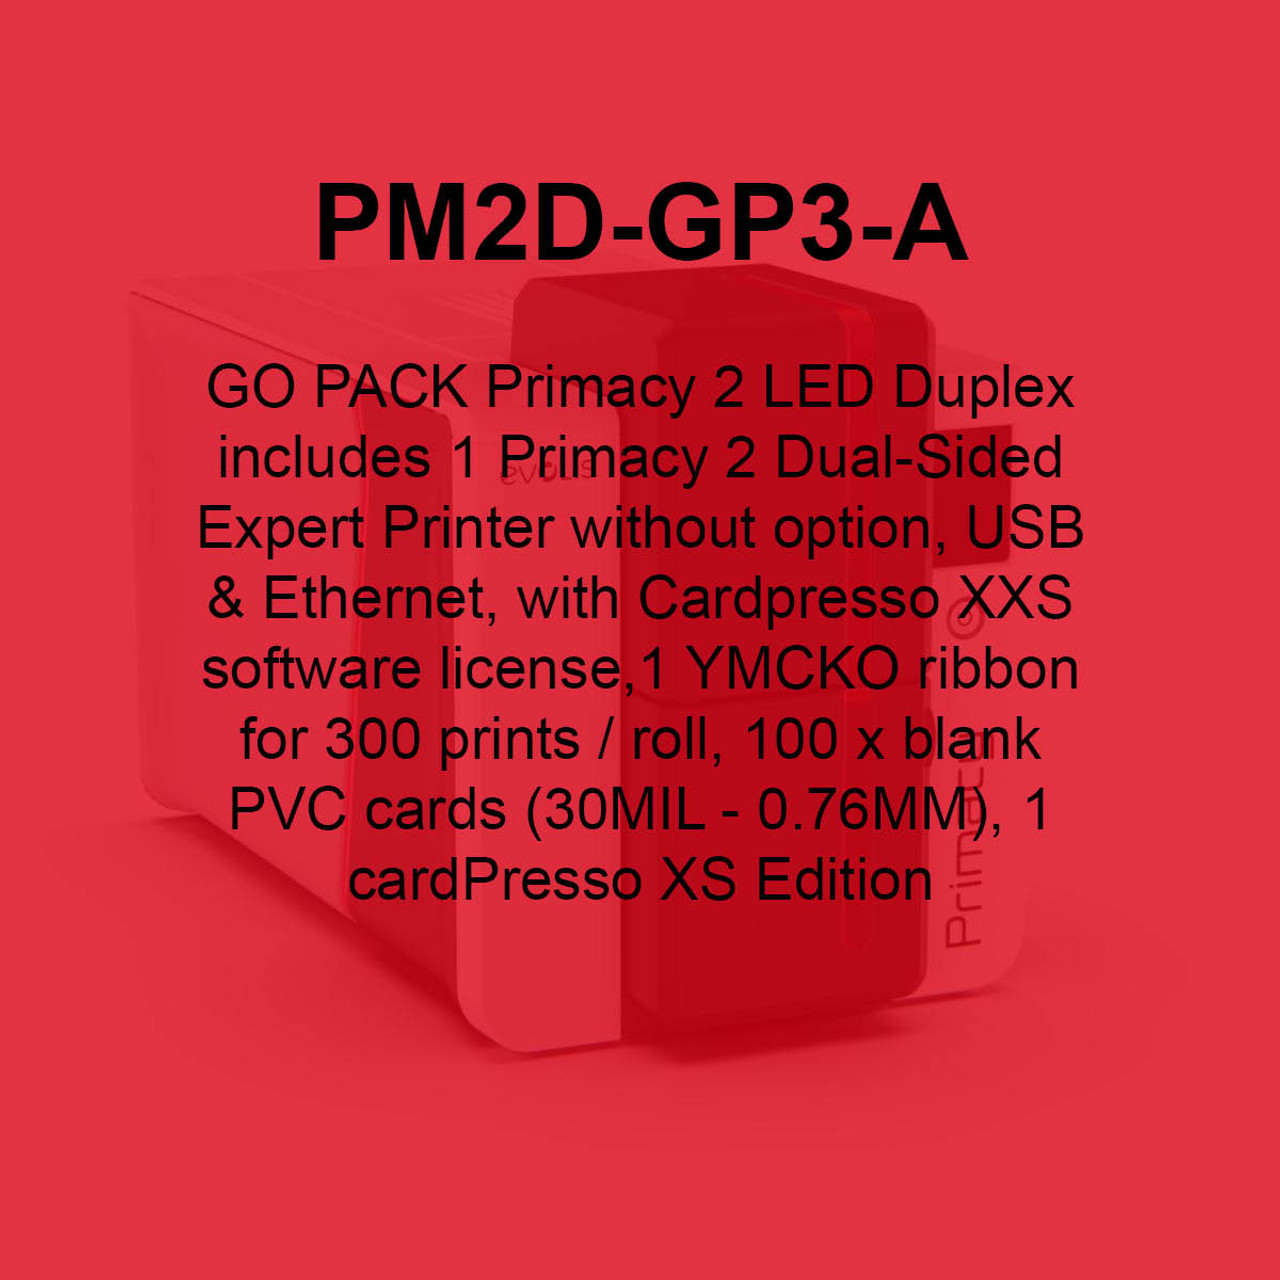 Evolis Primacy 2 Dual-Sided GO PACK - PM2D-GP3-A